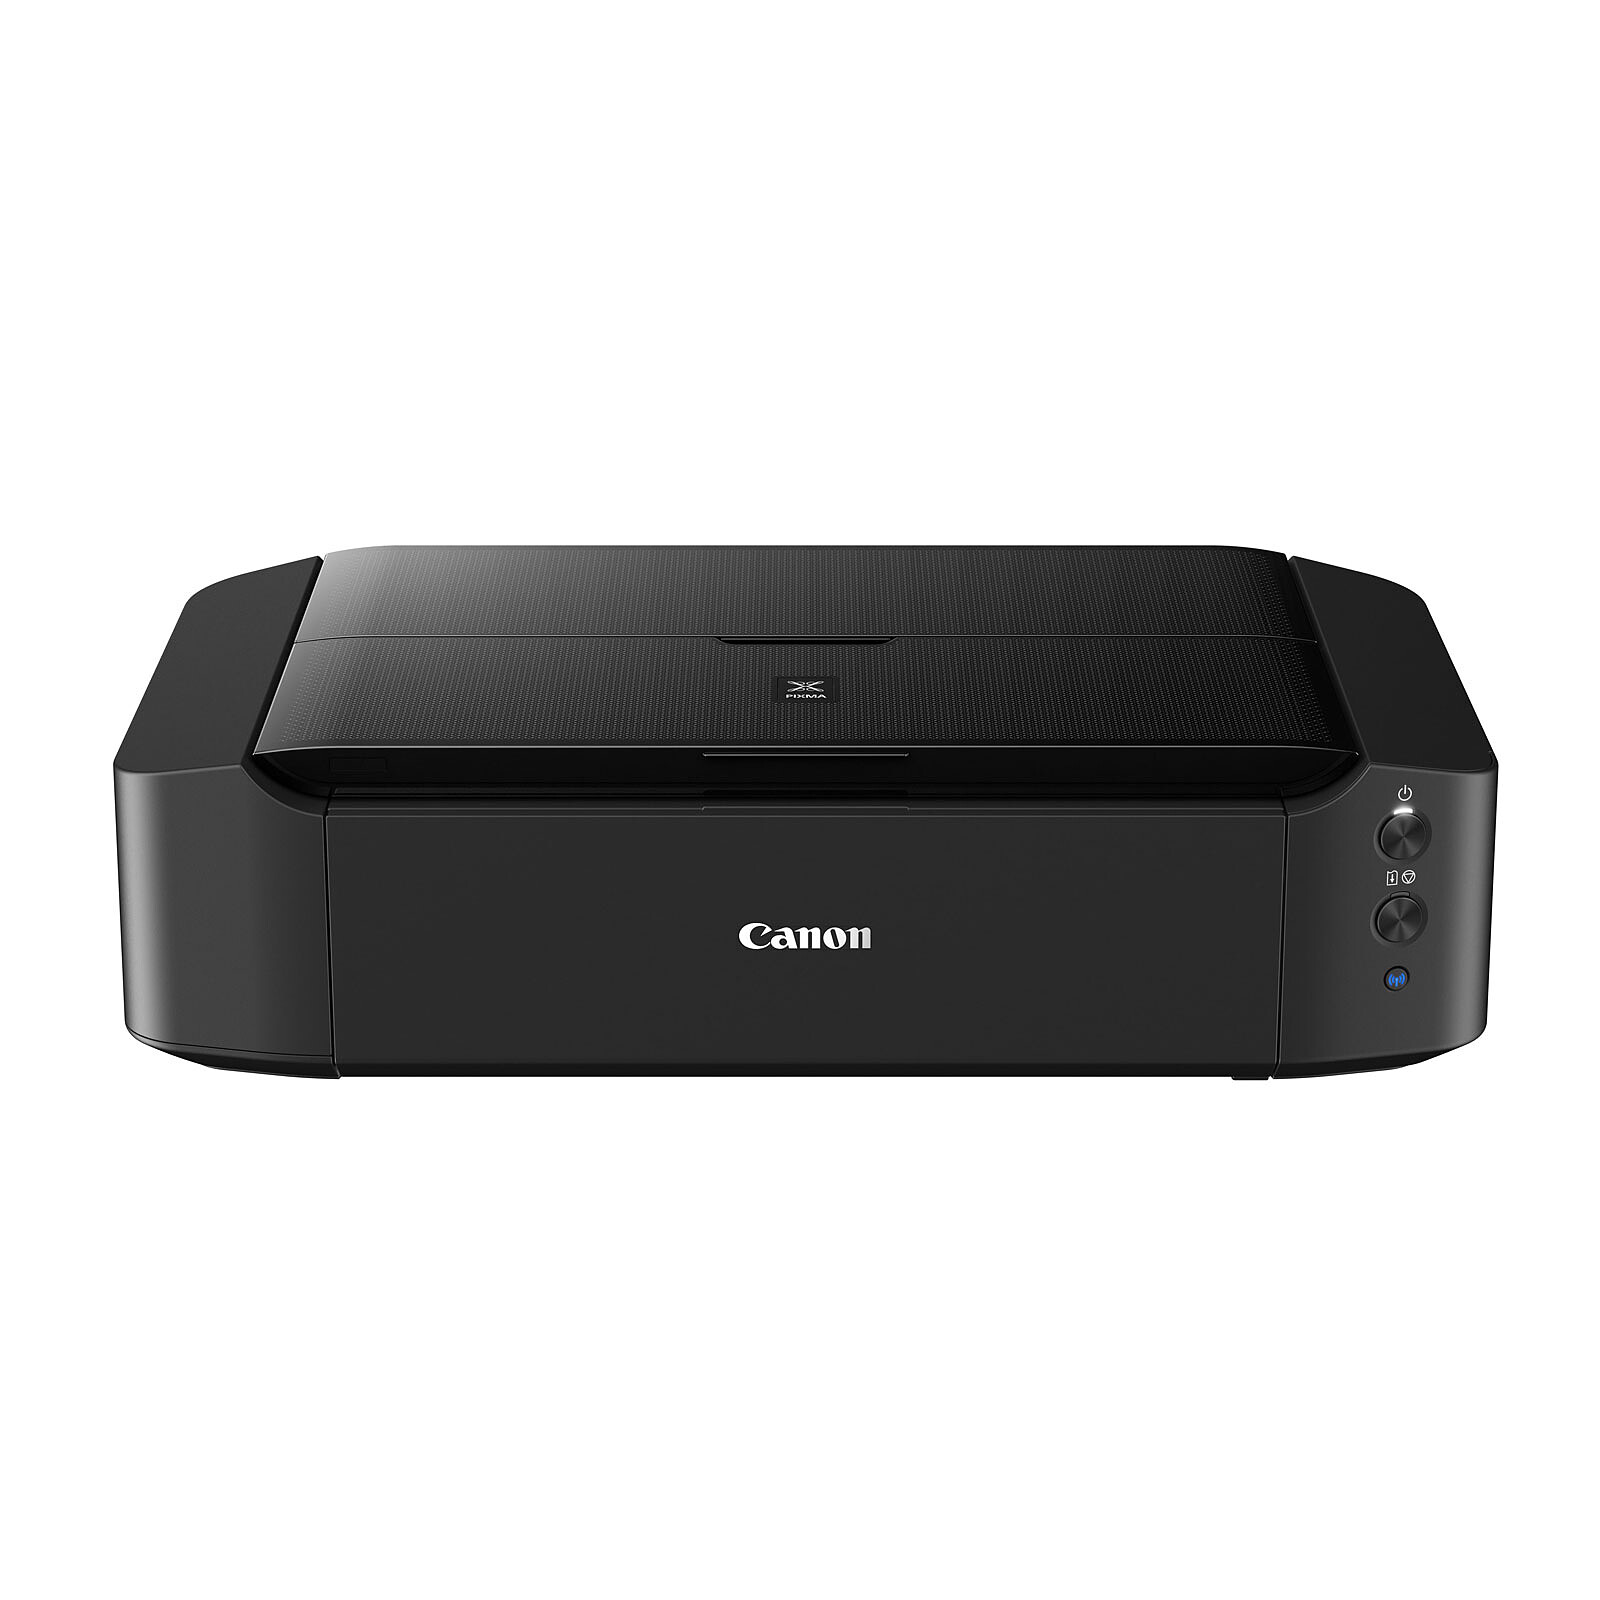 Canon PIXMA iP8750 Inkjet printer LDLC 3-year warranty